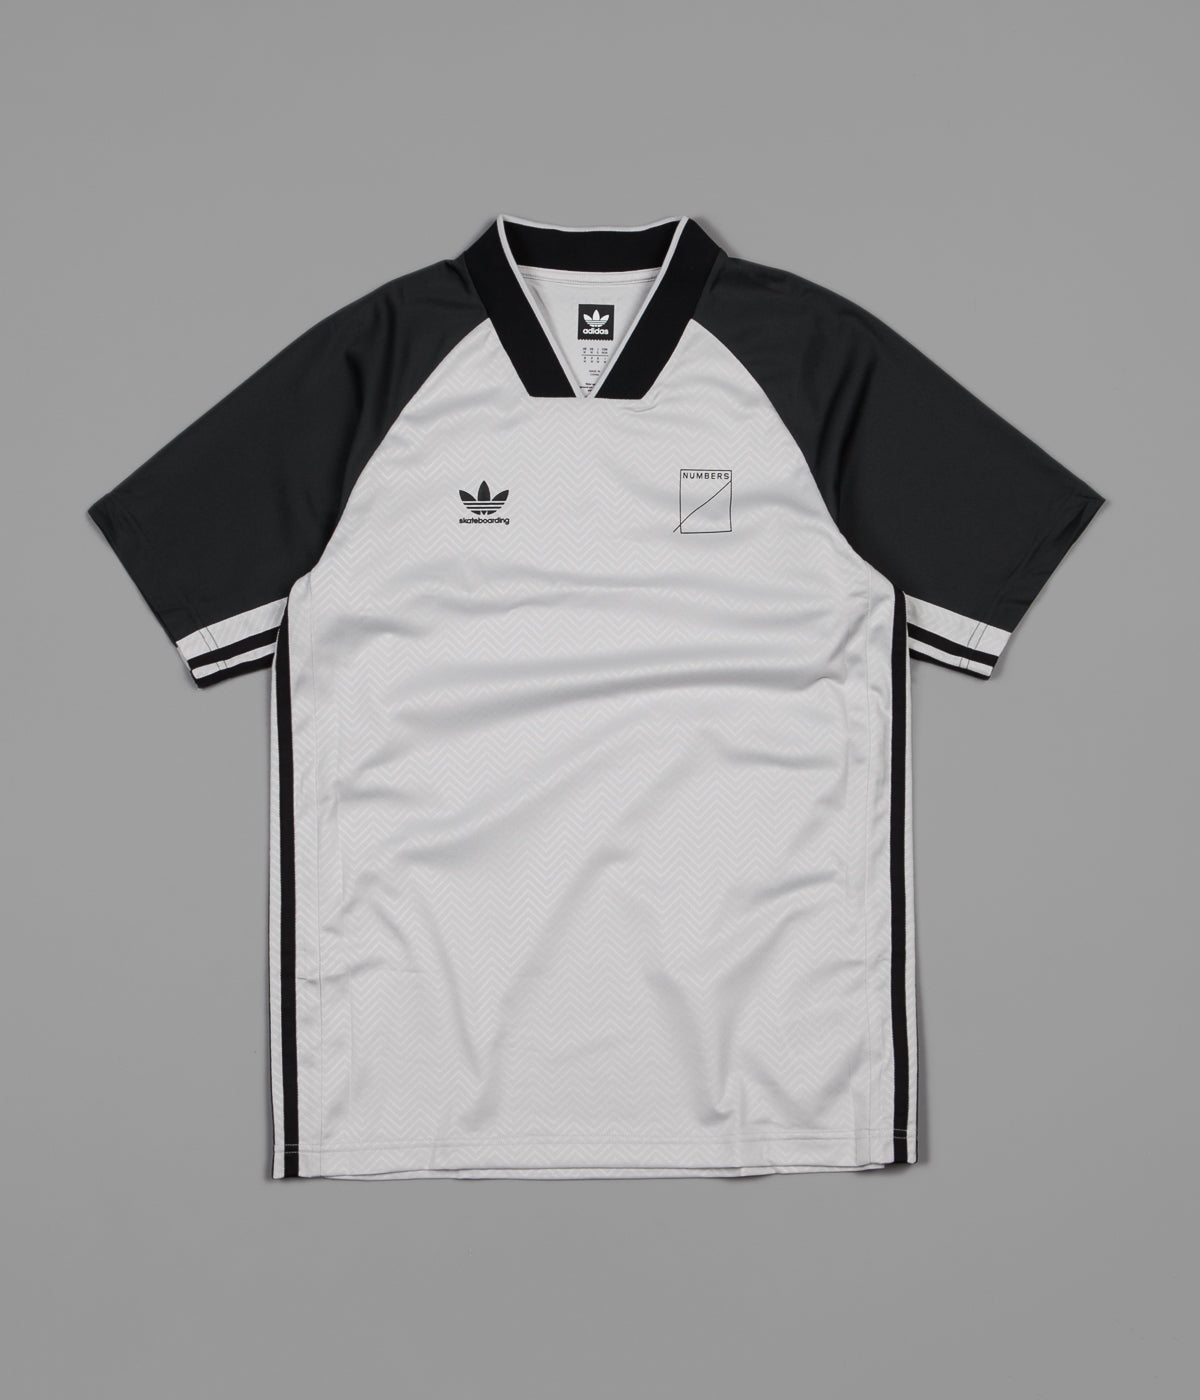 Adidas x Numbers Jersey - Black / Grey 